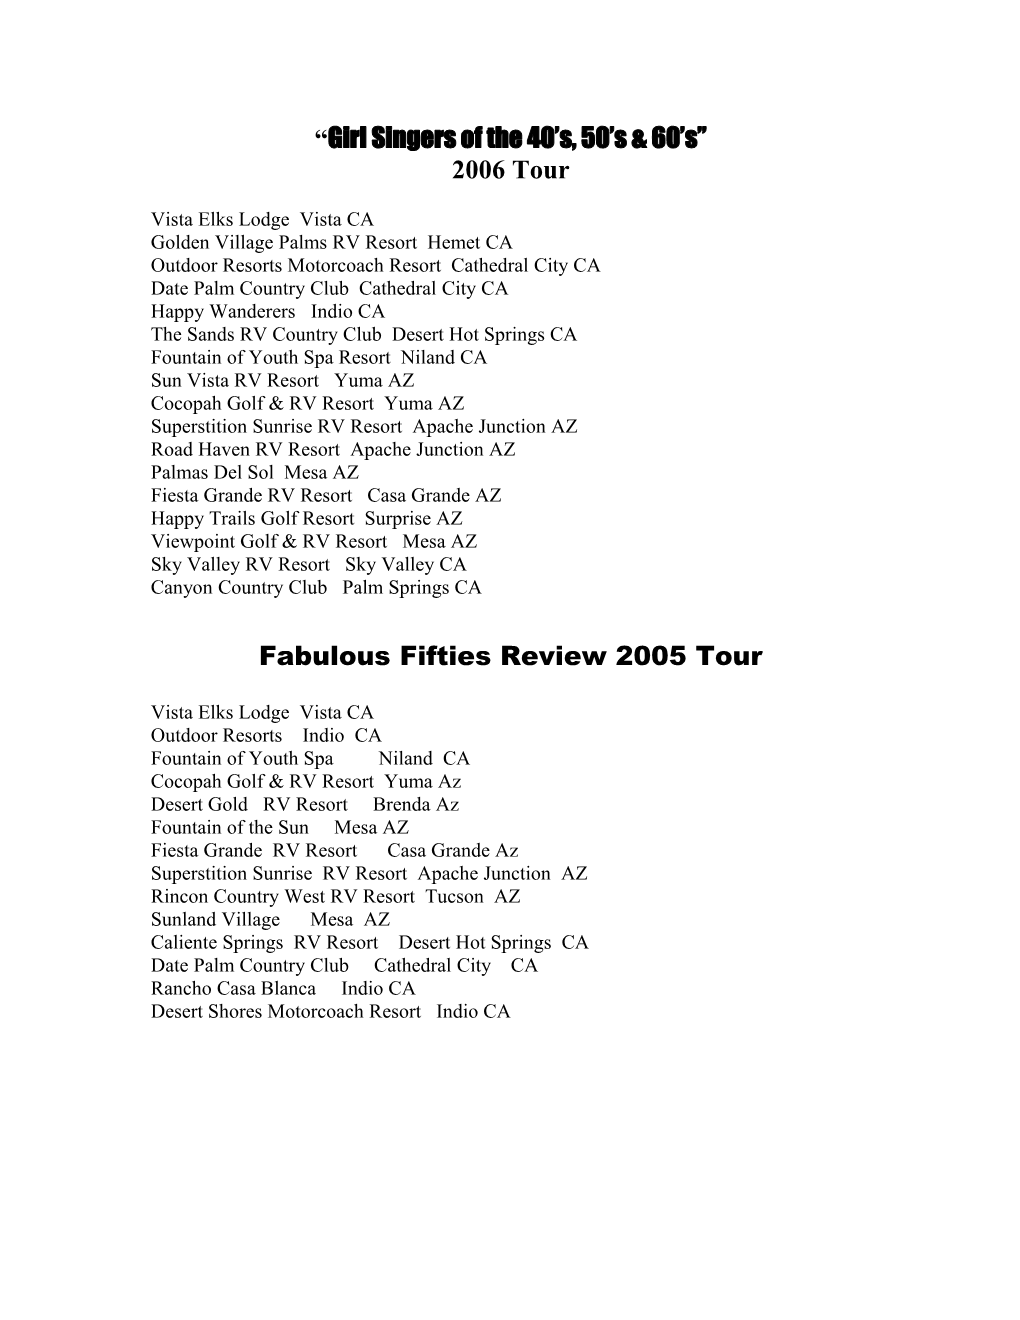 Fabulous Fifties Review 2005 Tour